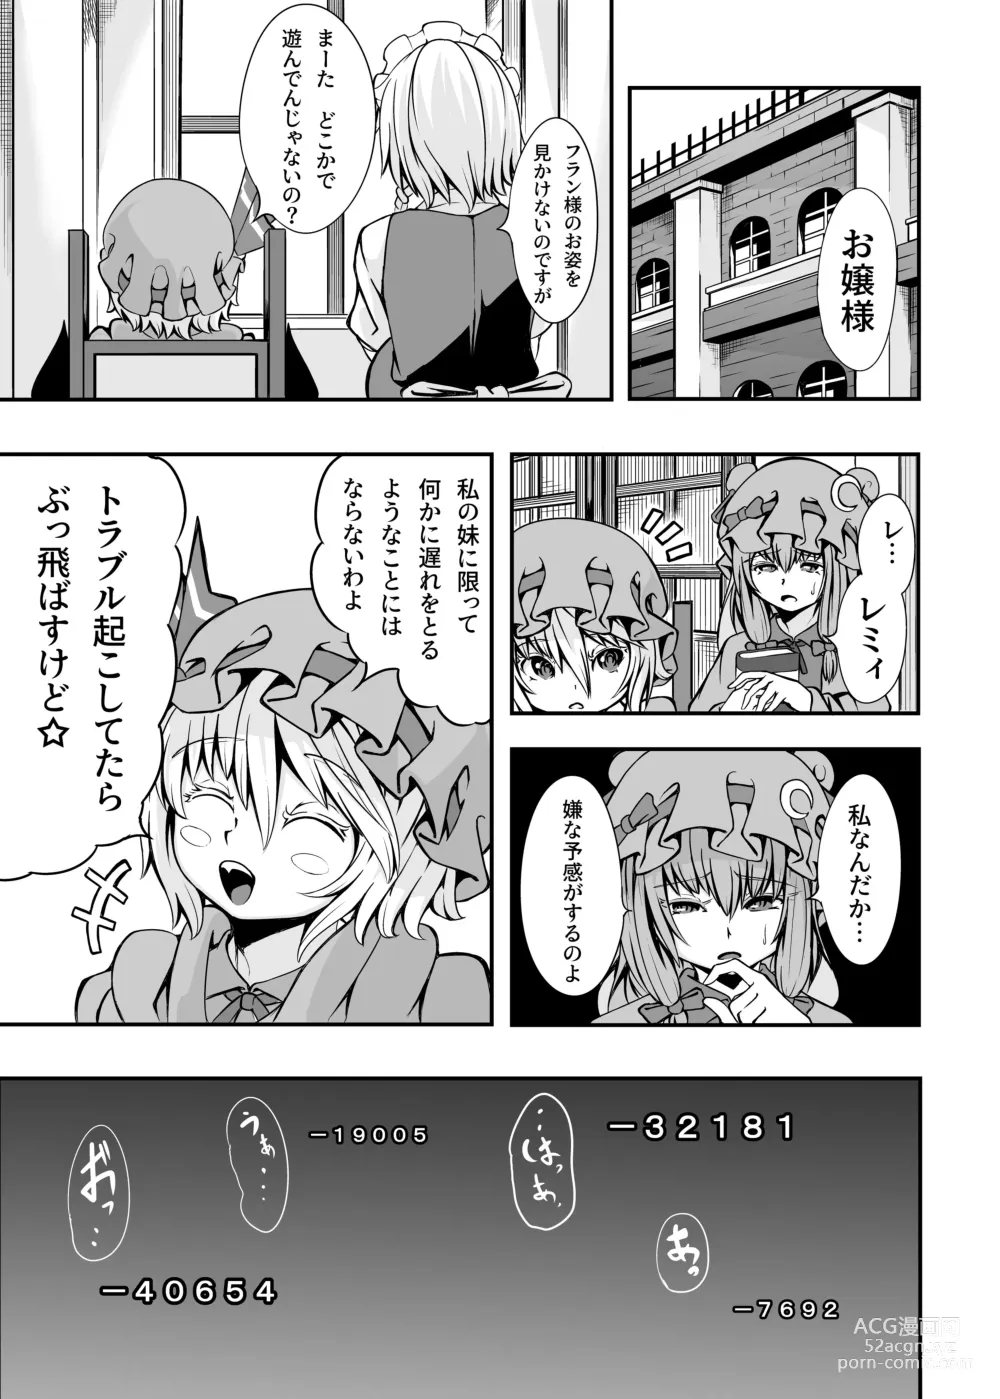 Page 22 of doujinshi Flan-chan and ETD